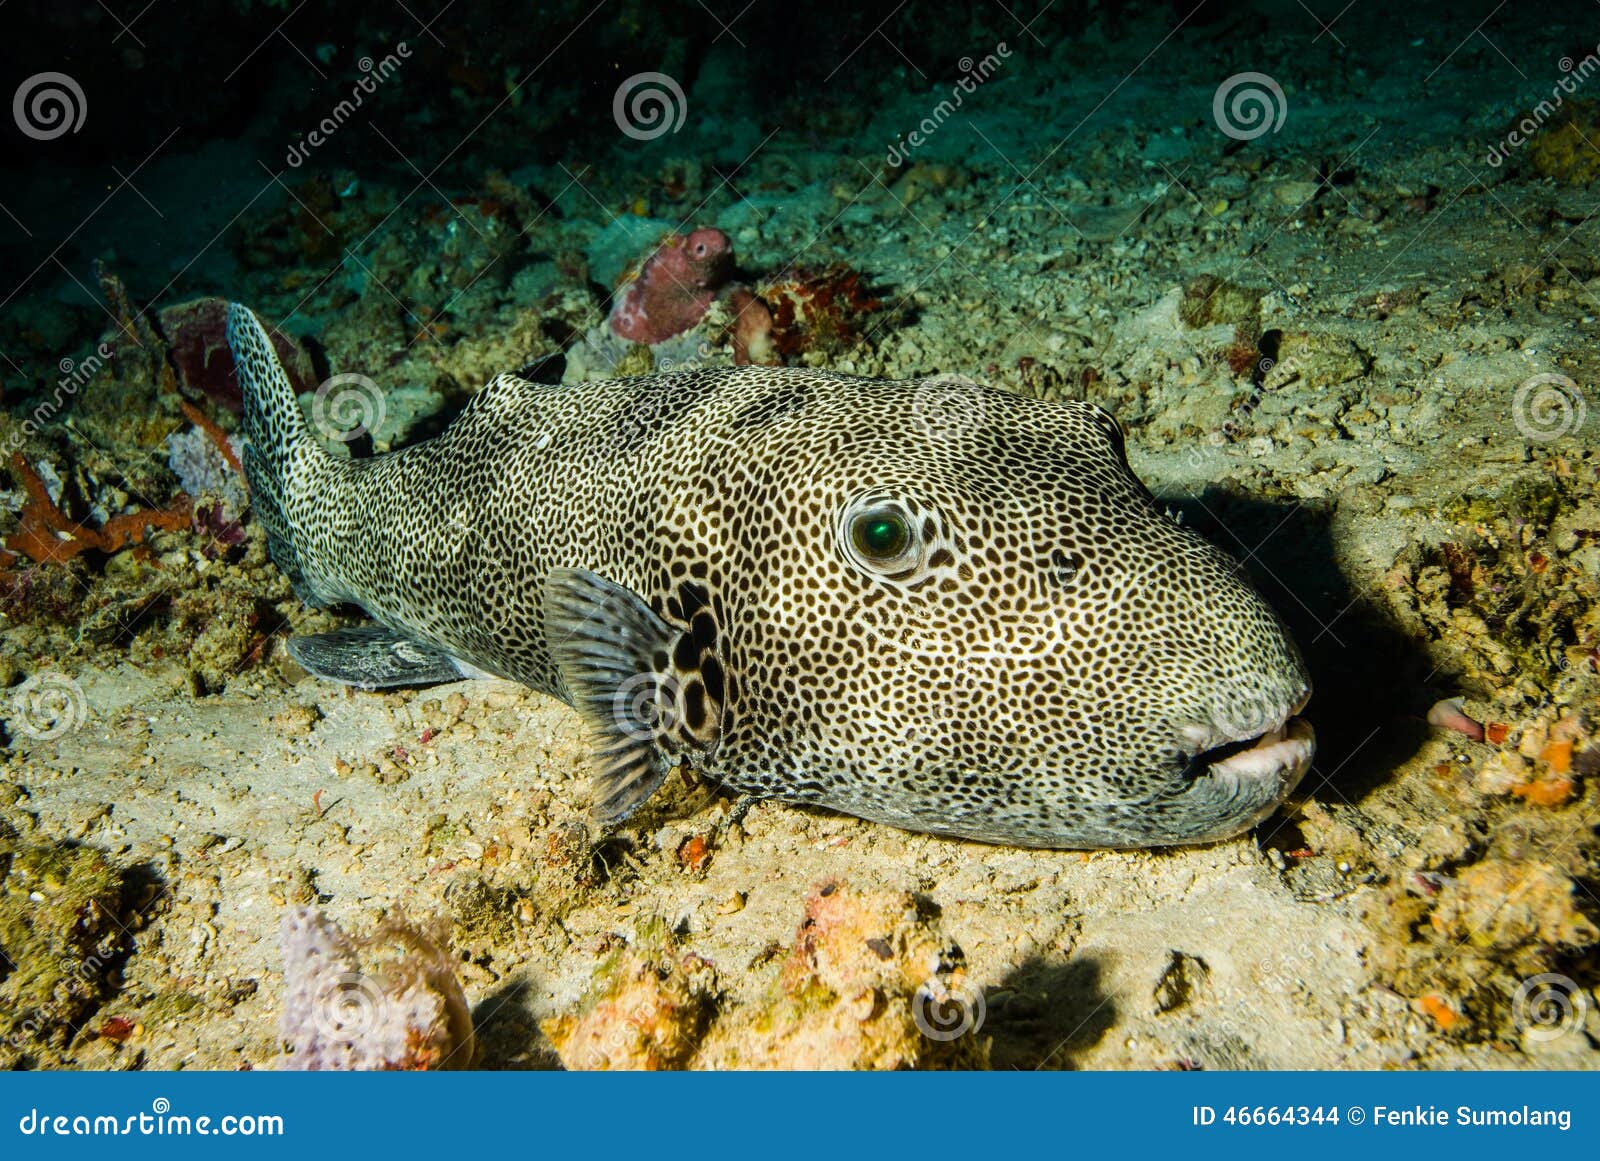 pufferfish arothron mappa resting on the substrate in derawan, kalimantan, indonesia underwater photo